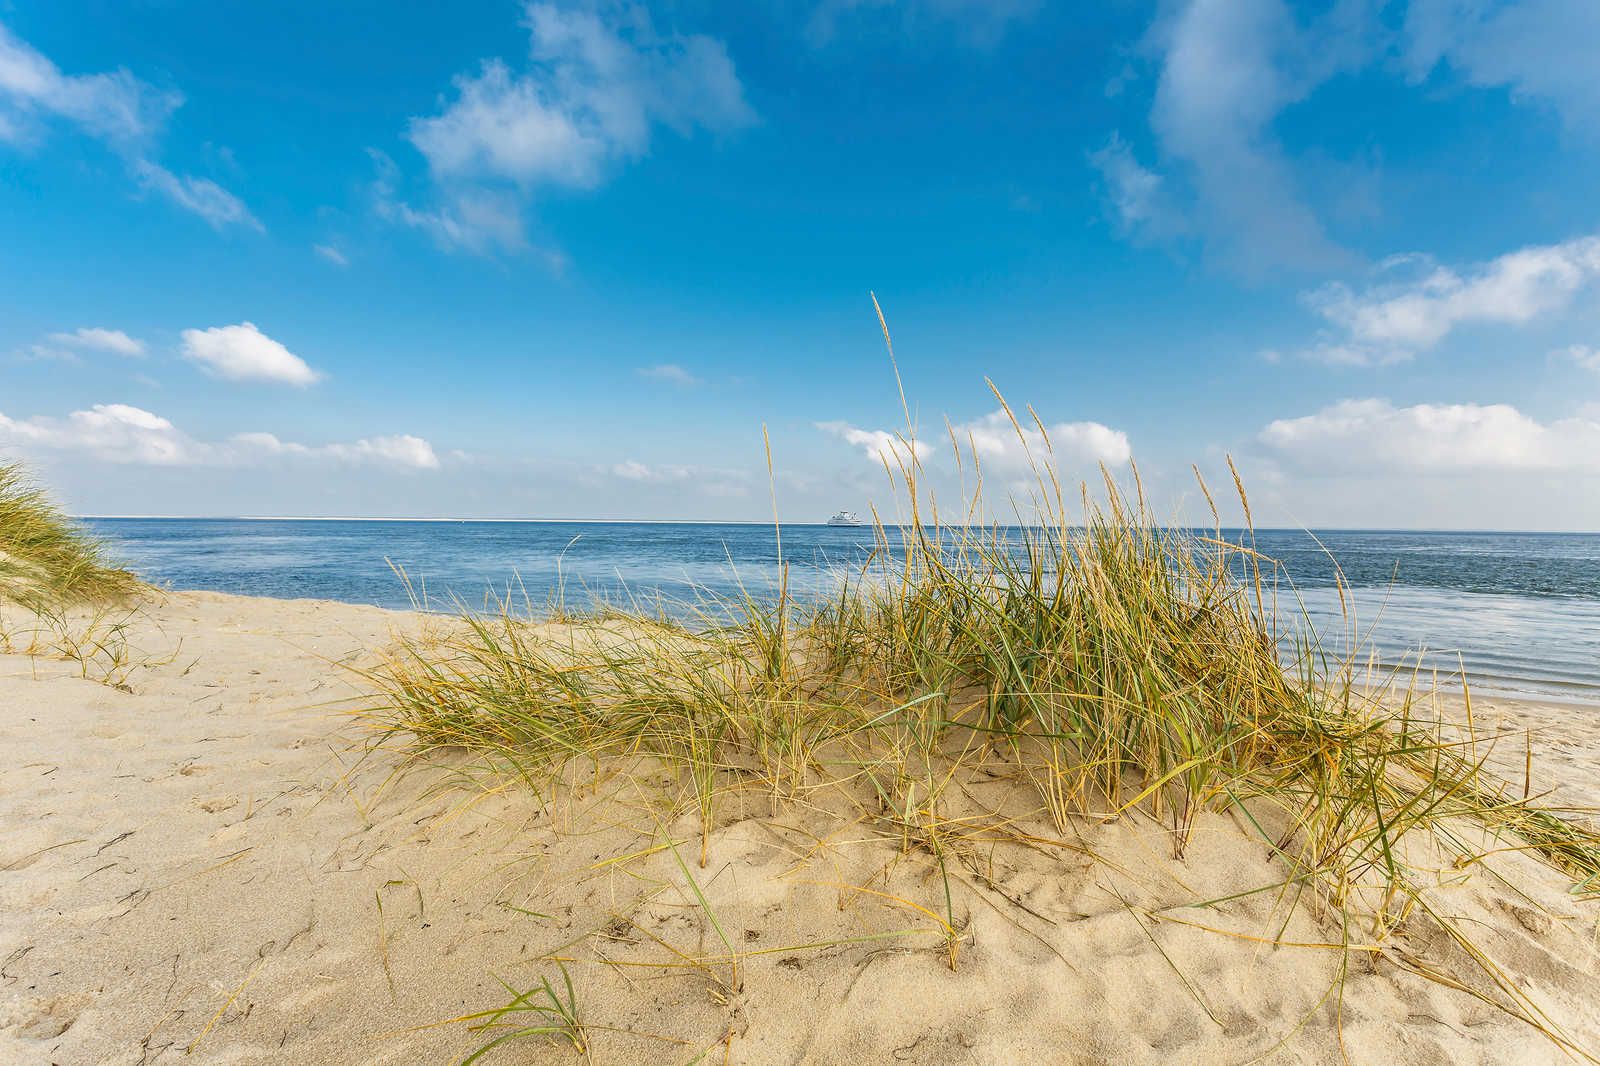             Canvas painting Coastal landscape with dune beach - 0,90 m x 0,60 m
        